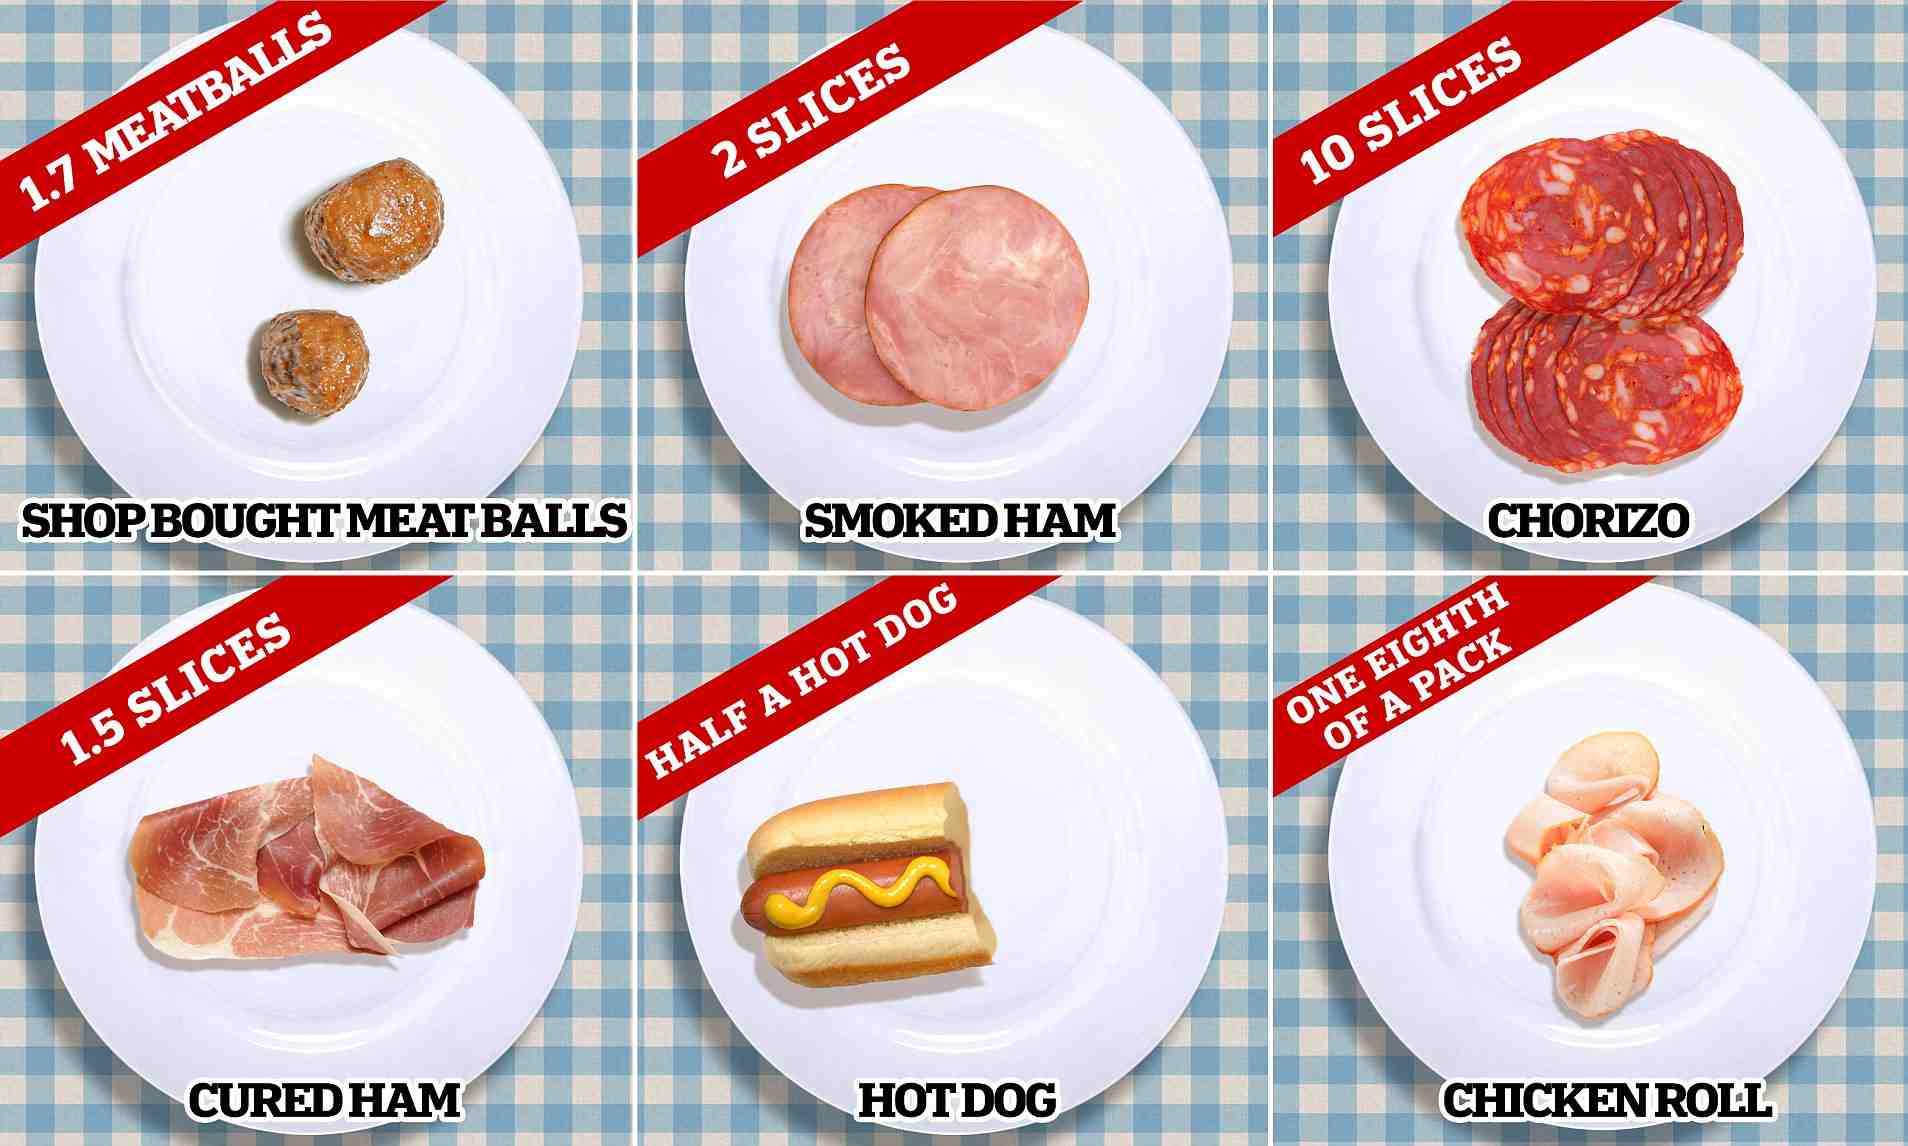 What's healthier ham or sausage?